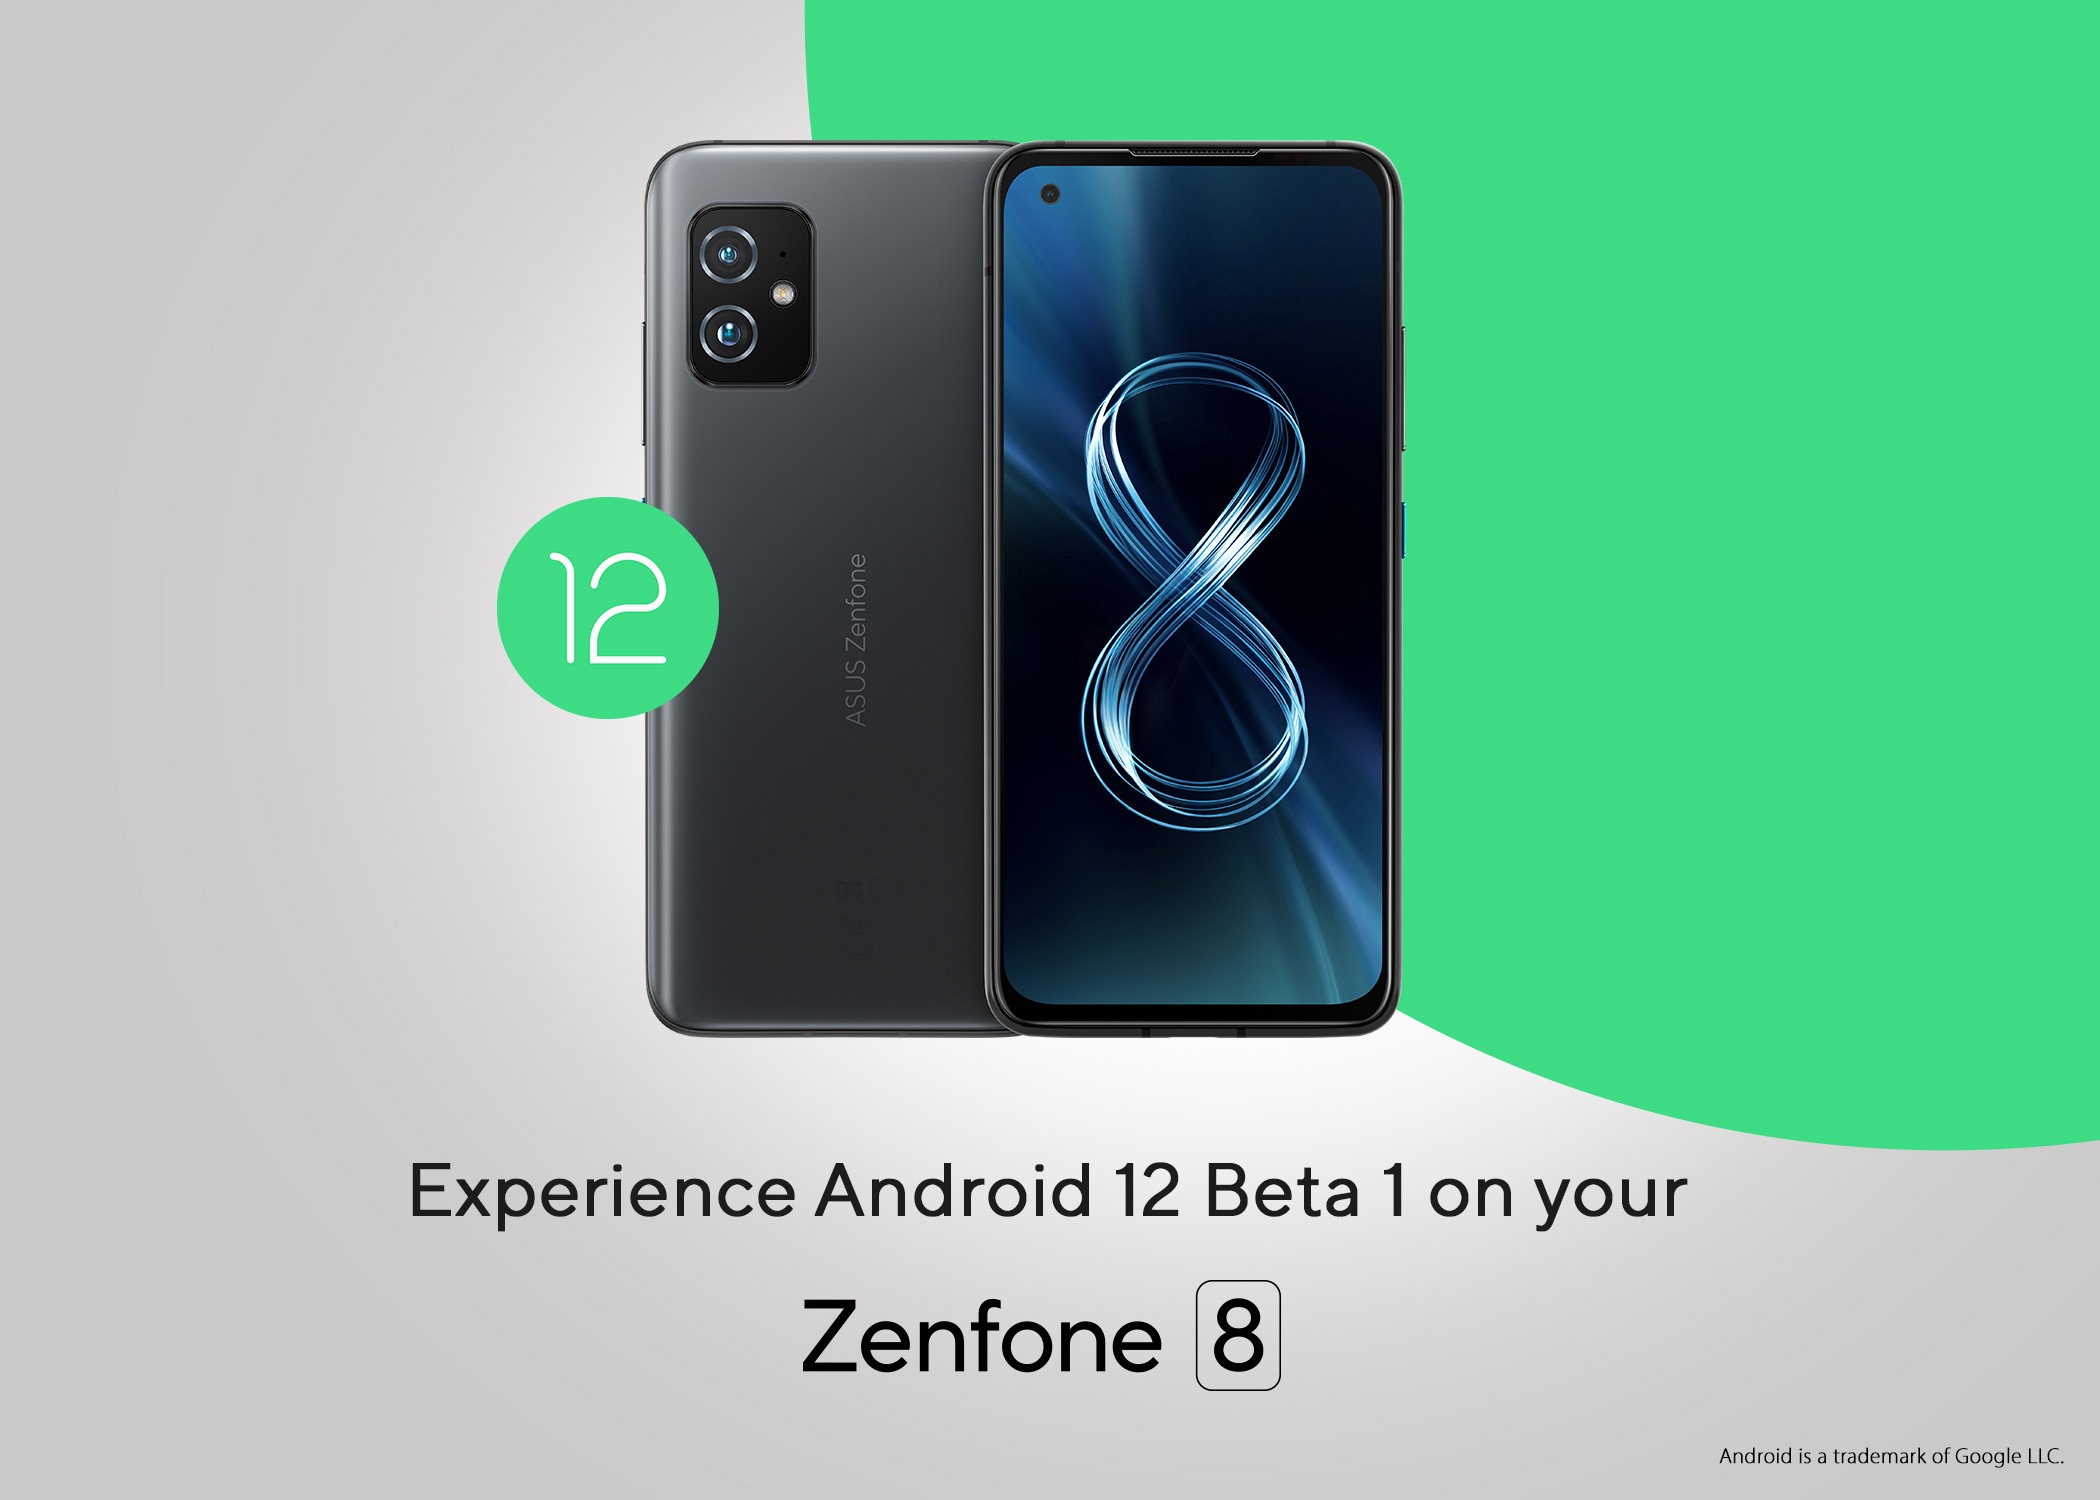 ASUS Zenfone 8 Android 12 Beta